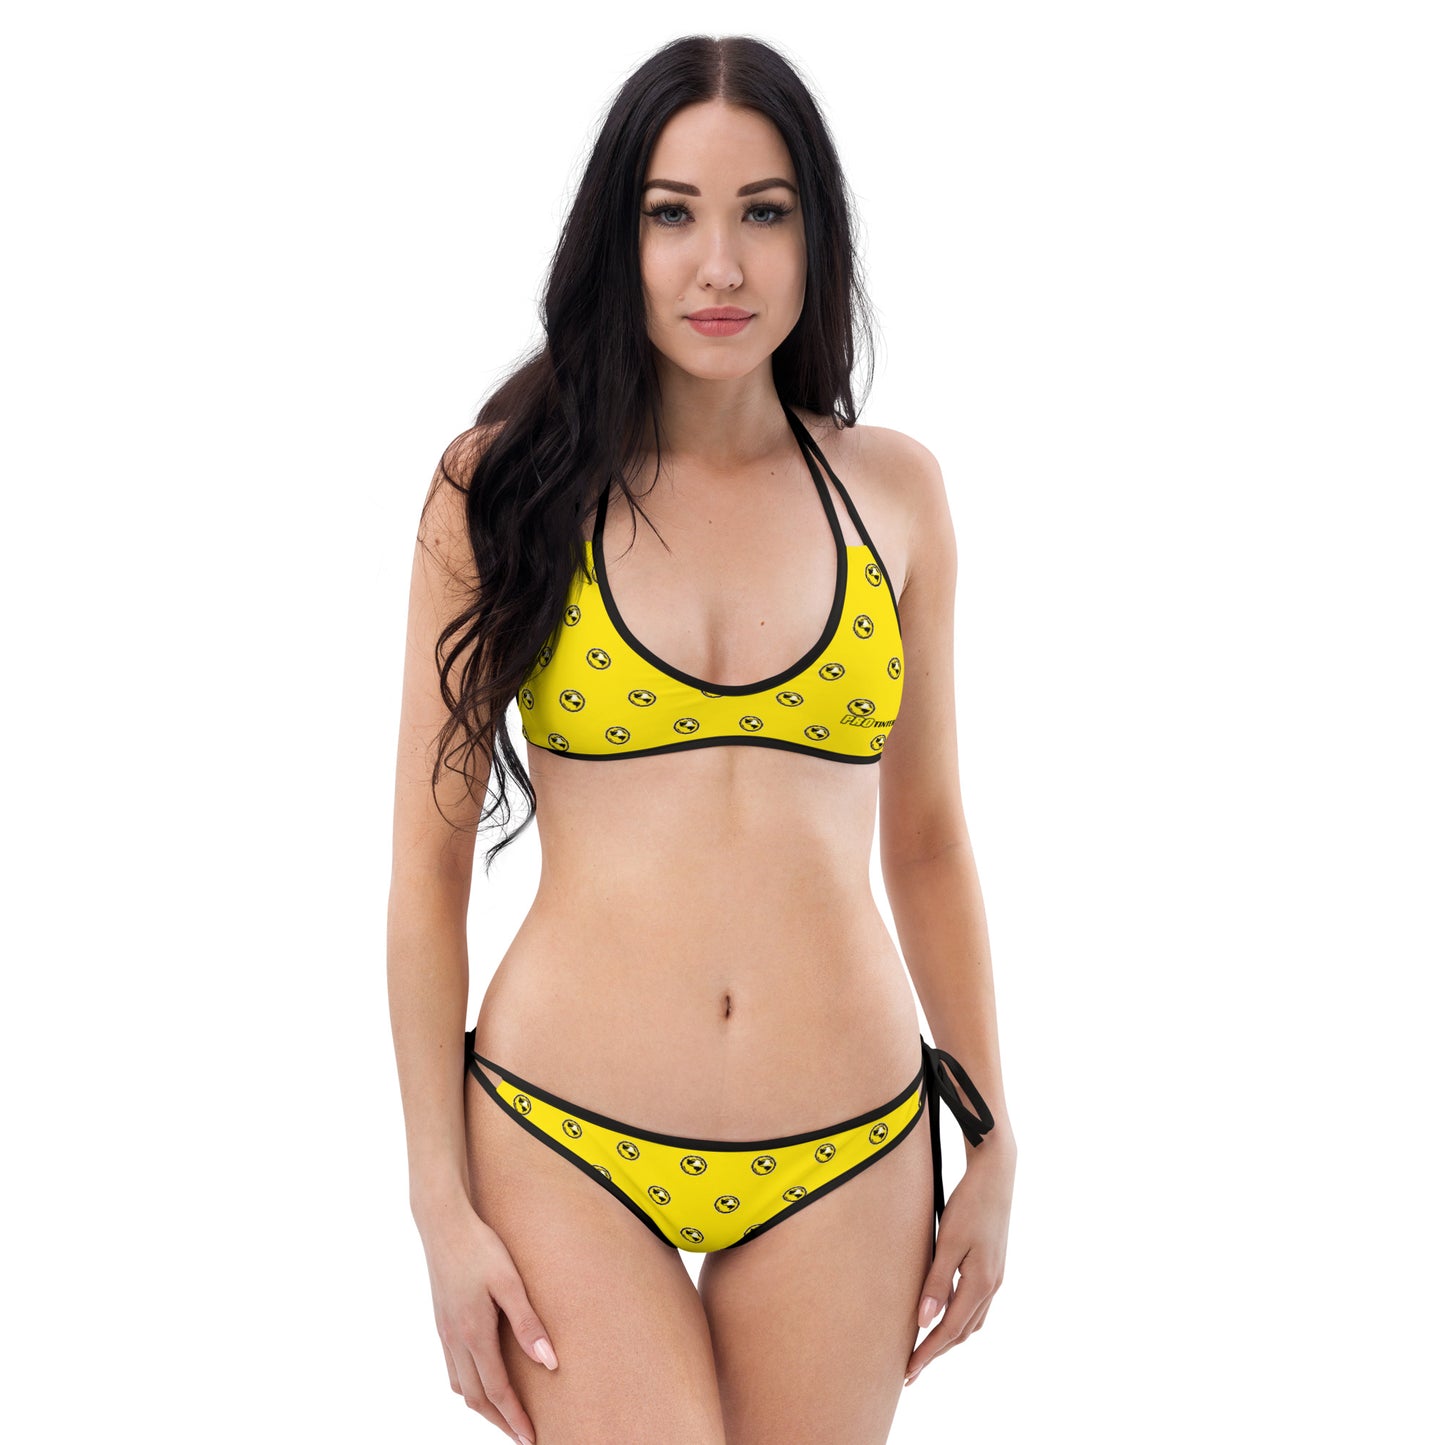 Tint World Yellow Reversible Bikini by PRO Tinter (Special Design)